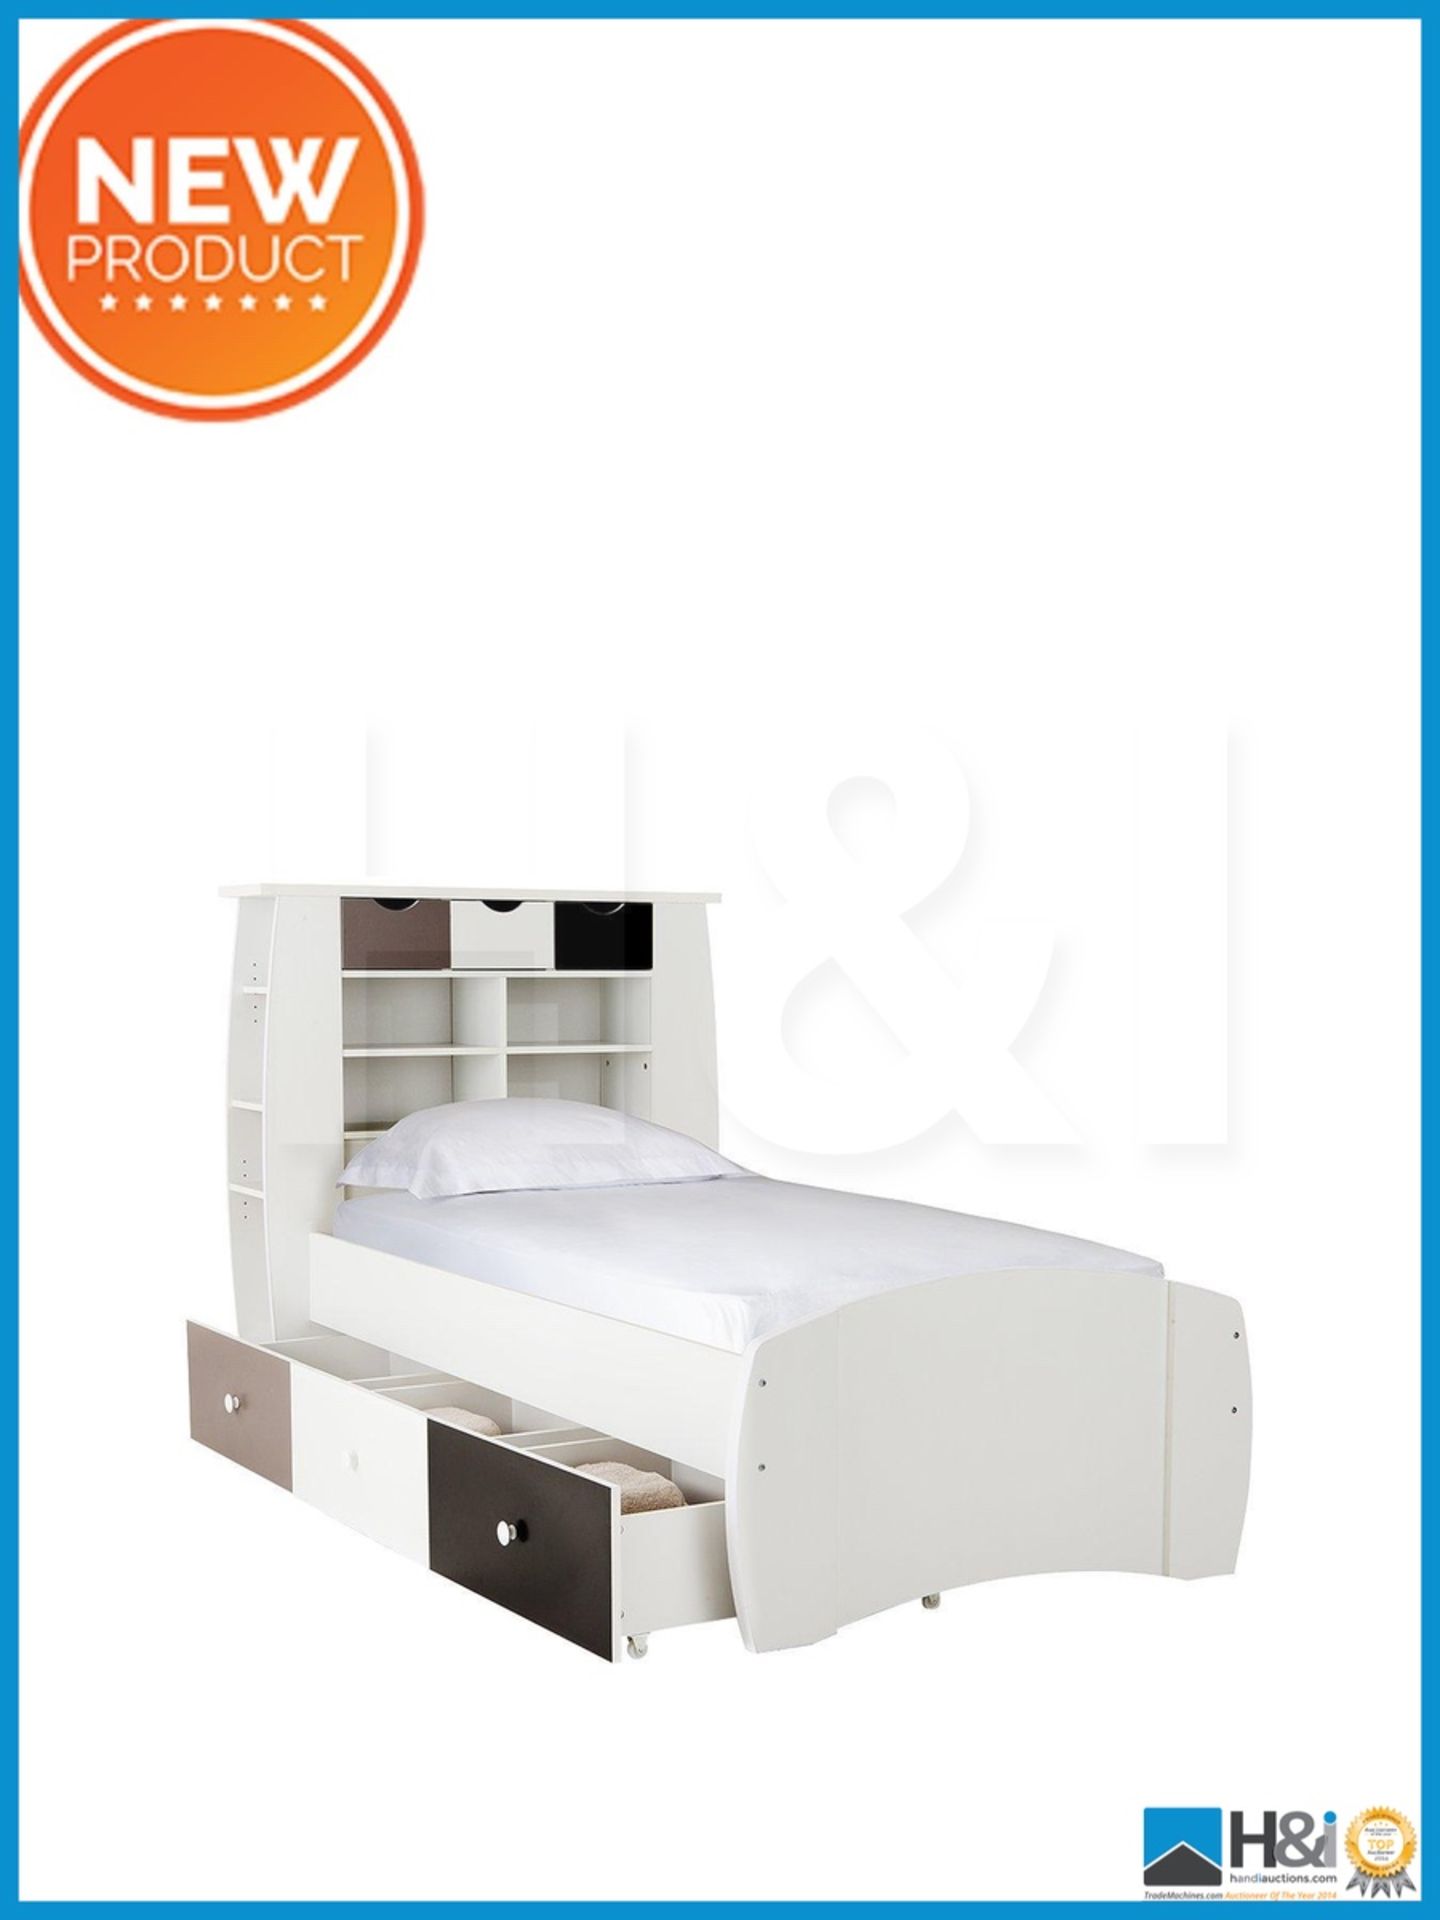 NEW IN BOX LADYBIRD ORLANDO SINGLE 3DRAWER BED [BLACK/SILVER] 121 x 116 x 222cm RRP £389